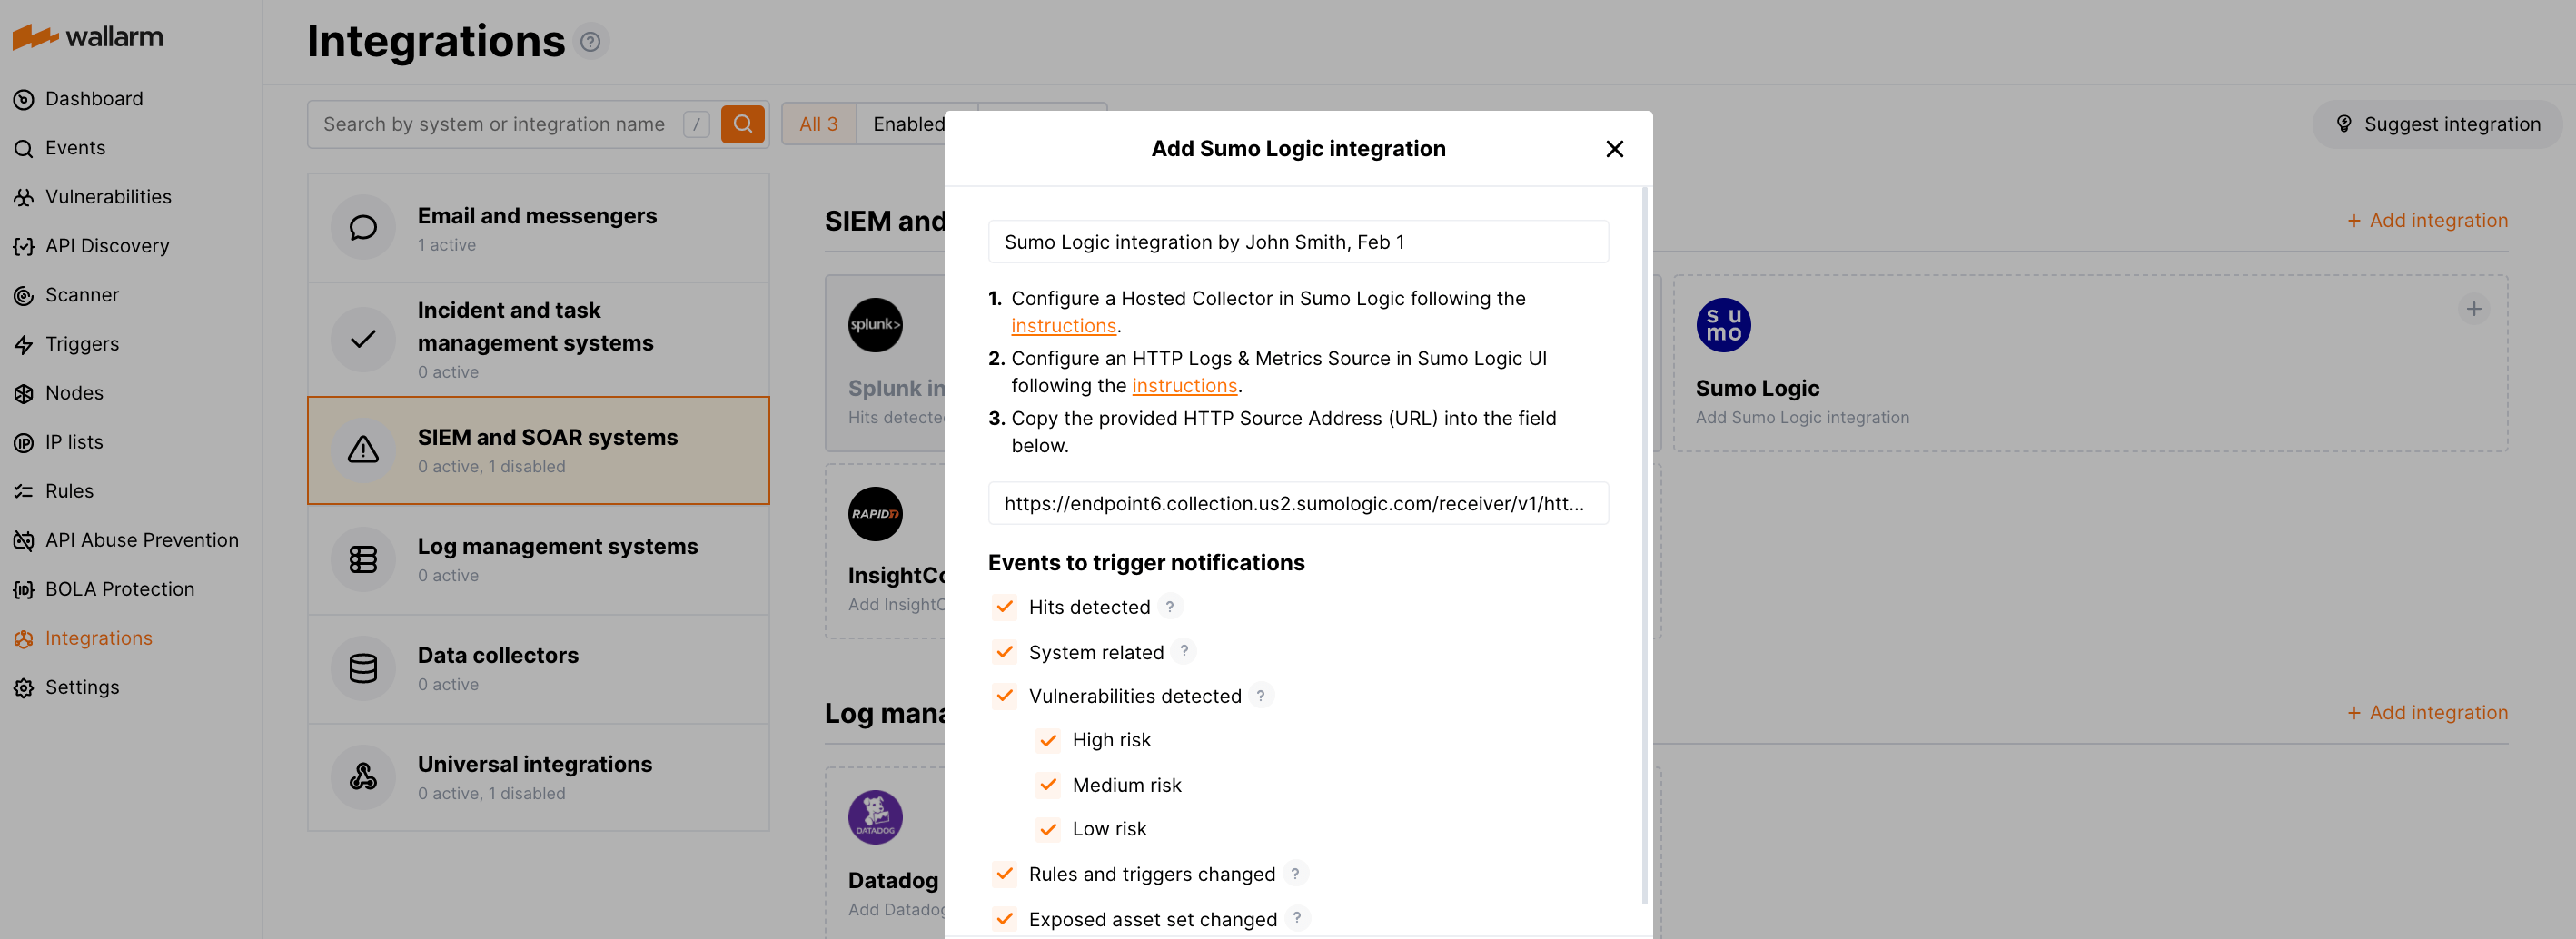 Sumo Logic integration